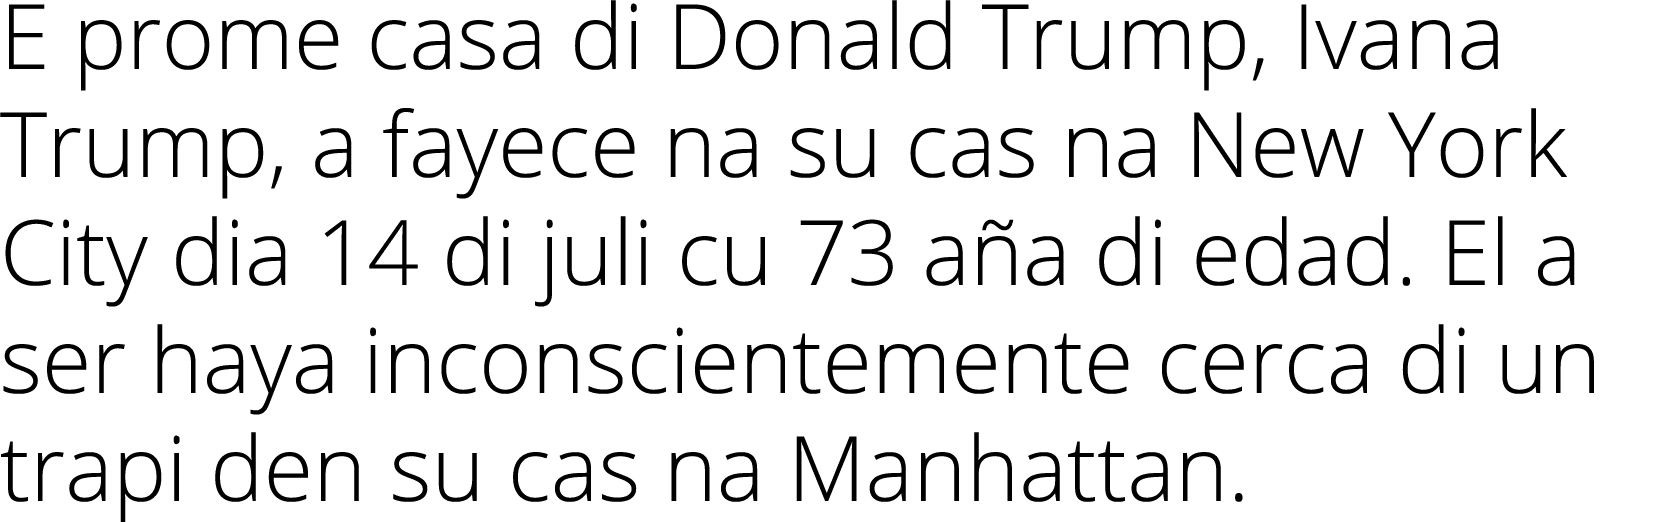 E prome casa di Donald Trump, Ivana Trump, a fayece na su cas na New York City dia 14 di juli cu 73 a a di edad. El a...